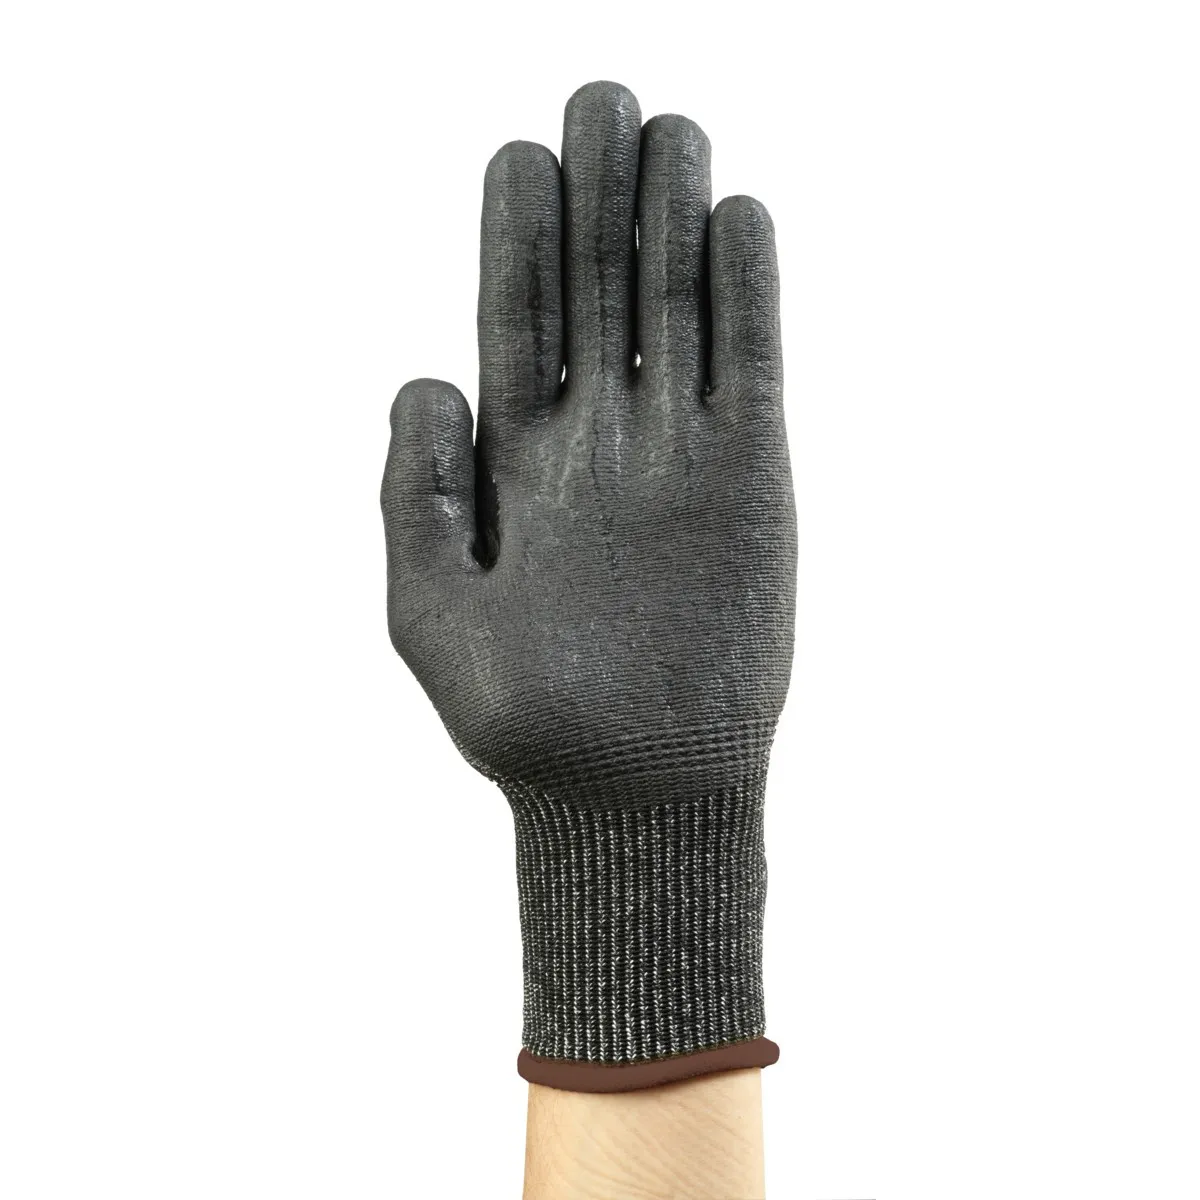 Zaštitne rukavice HYFLEX 11-738 tamno sive - Ansell - PAR 